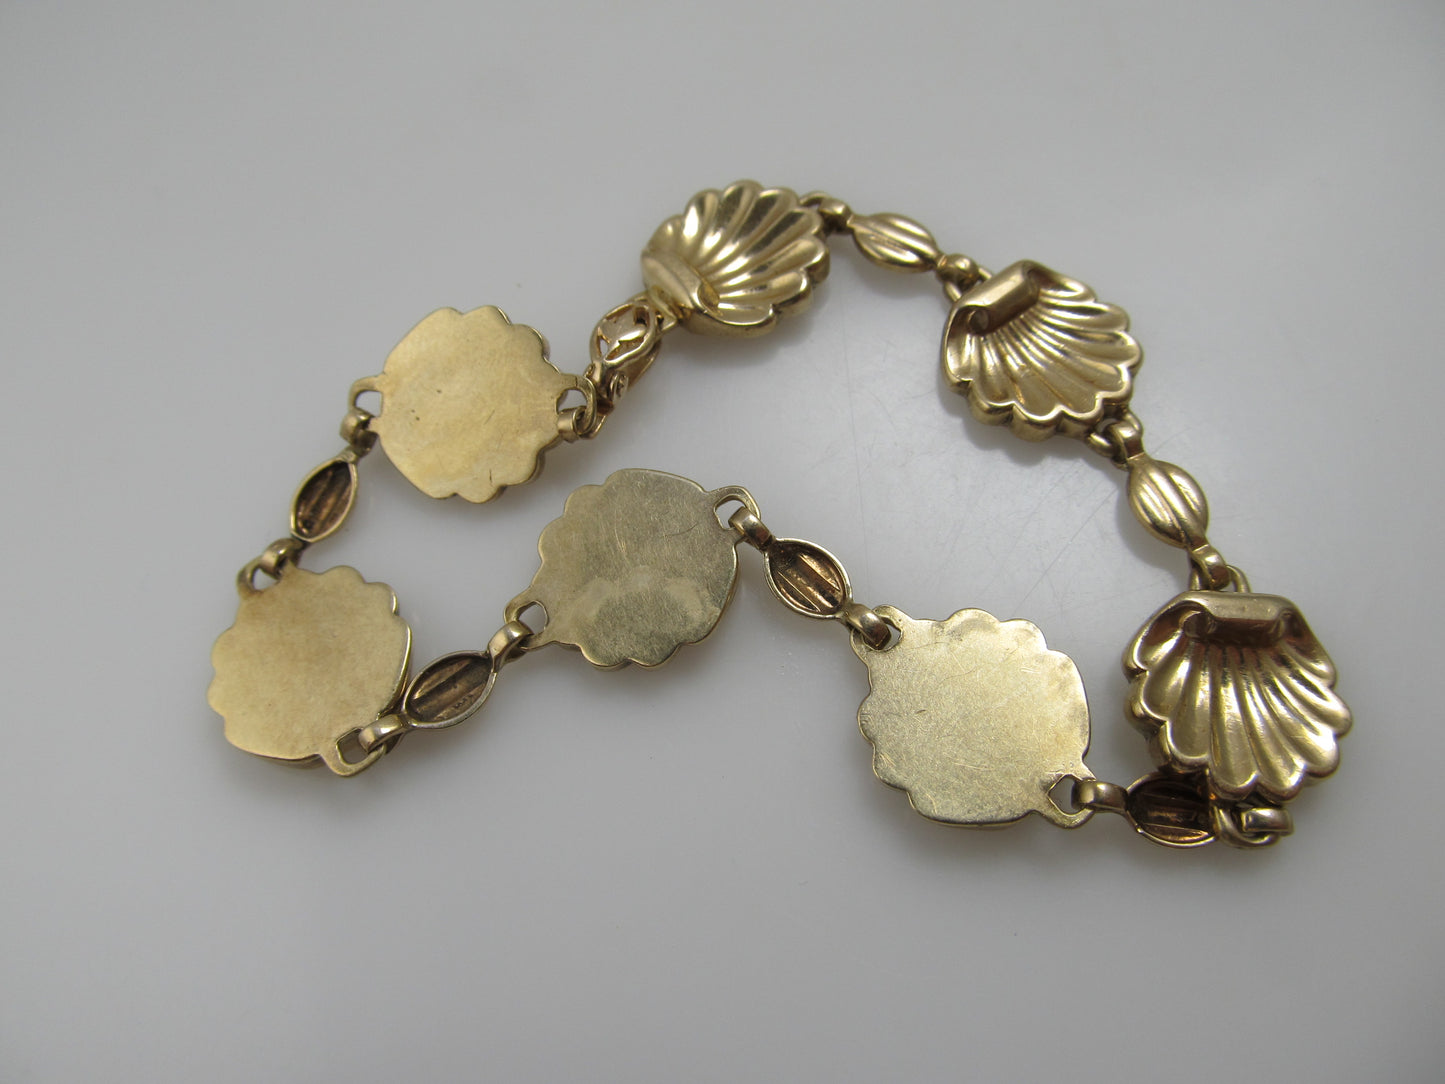 VIntage yellow gold shell bracelet